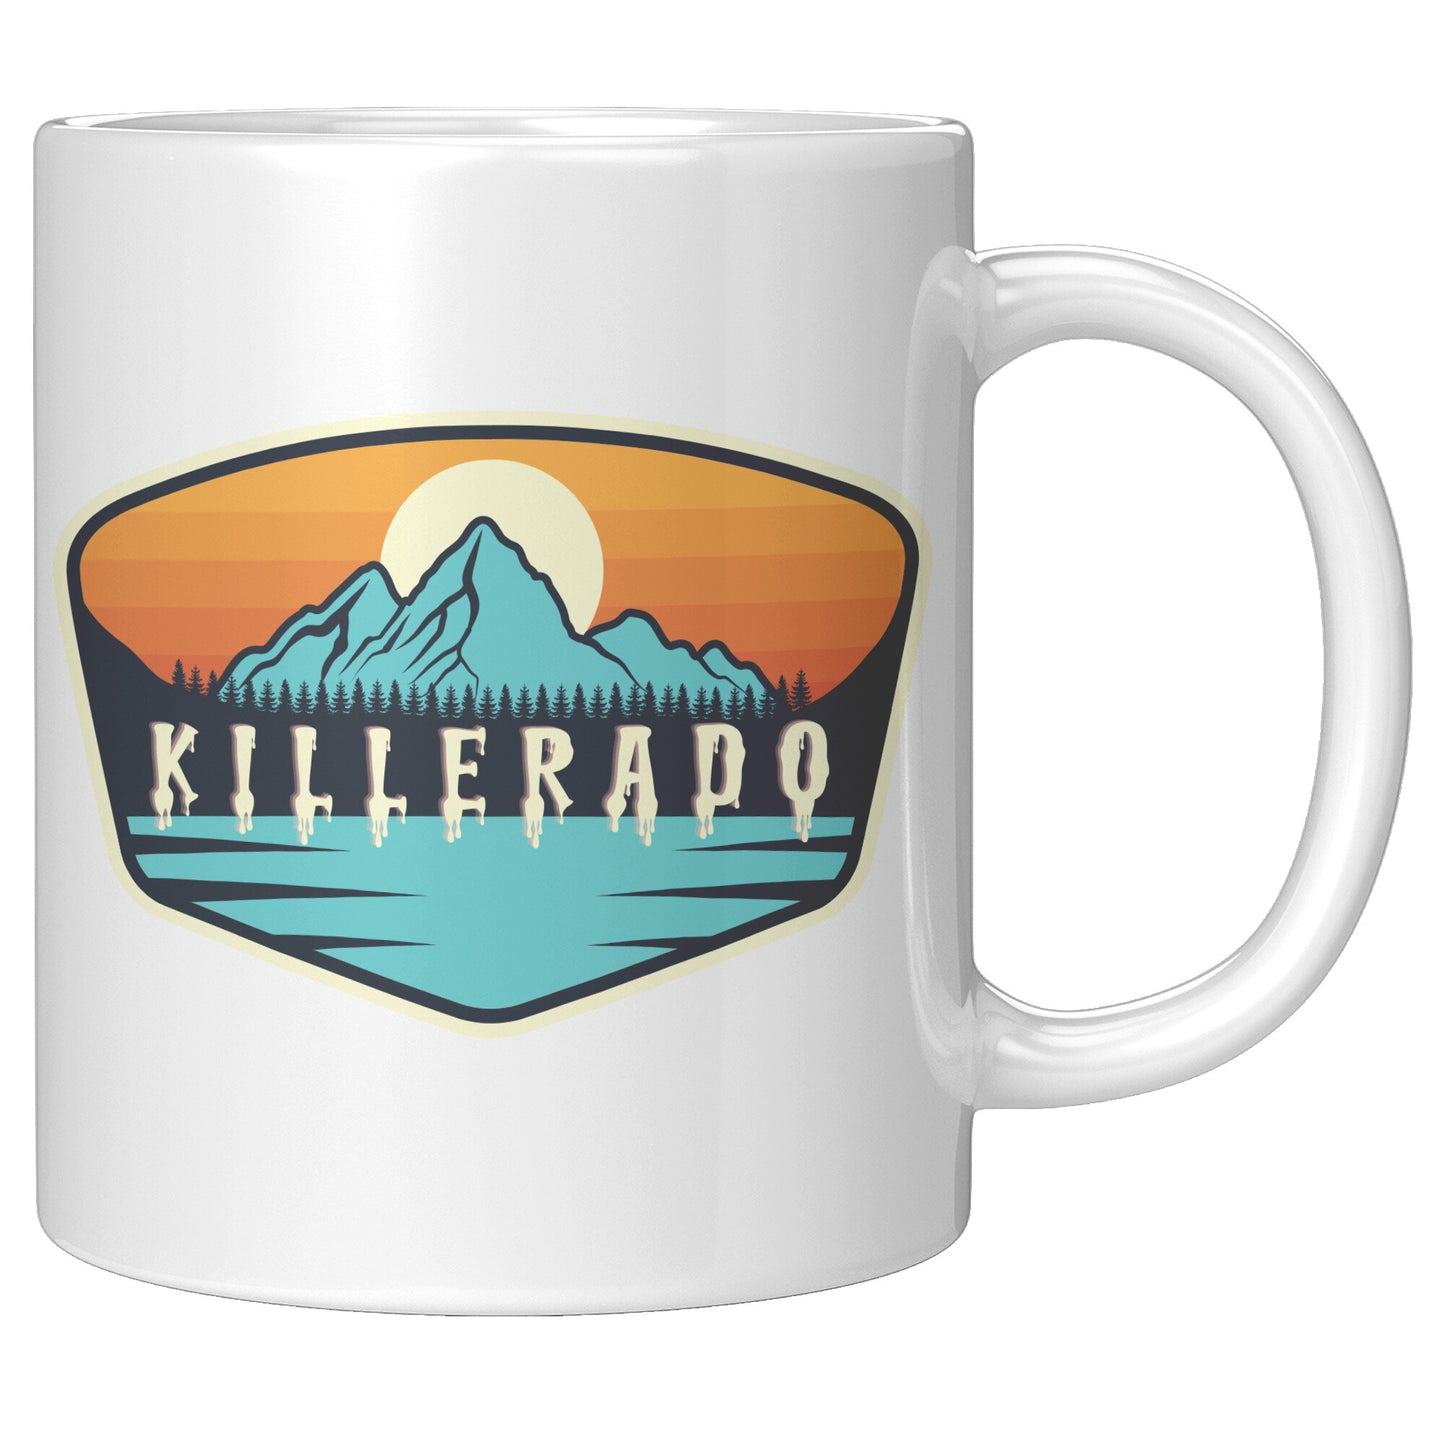 KILLERADO White 11oz Mug